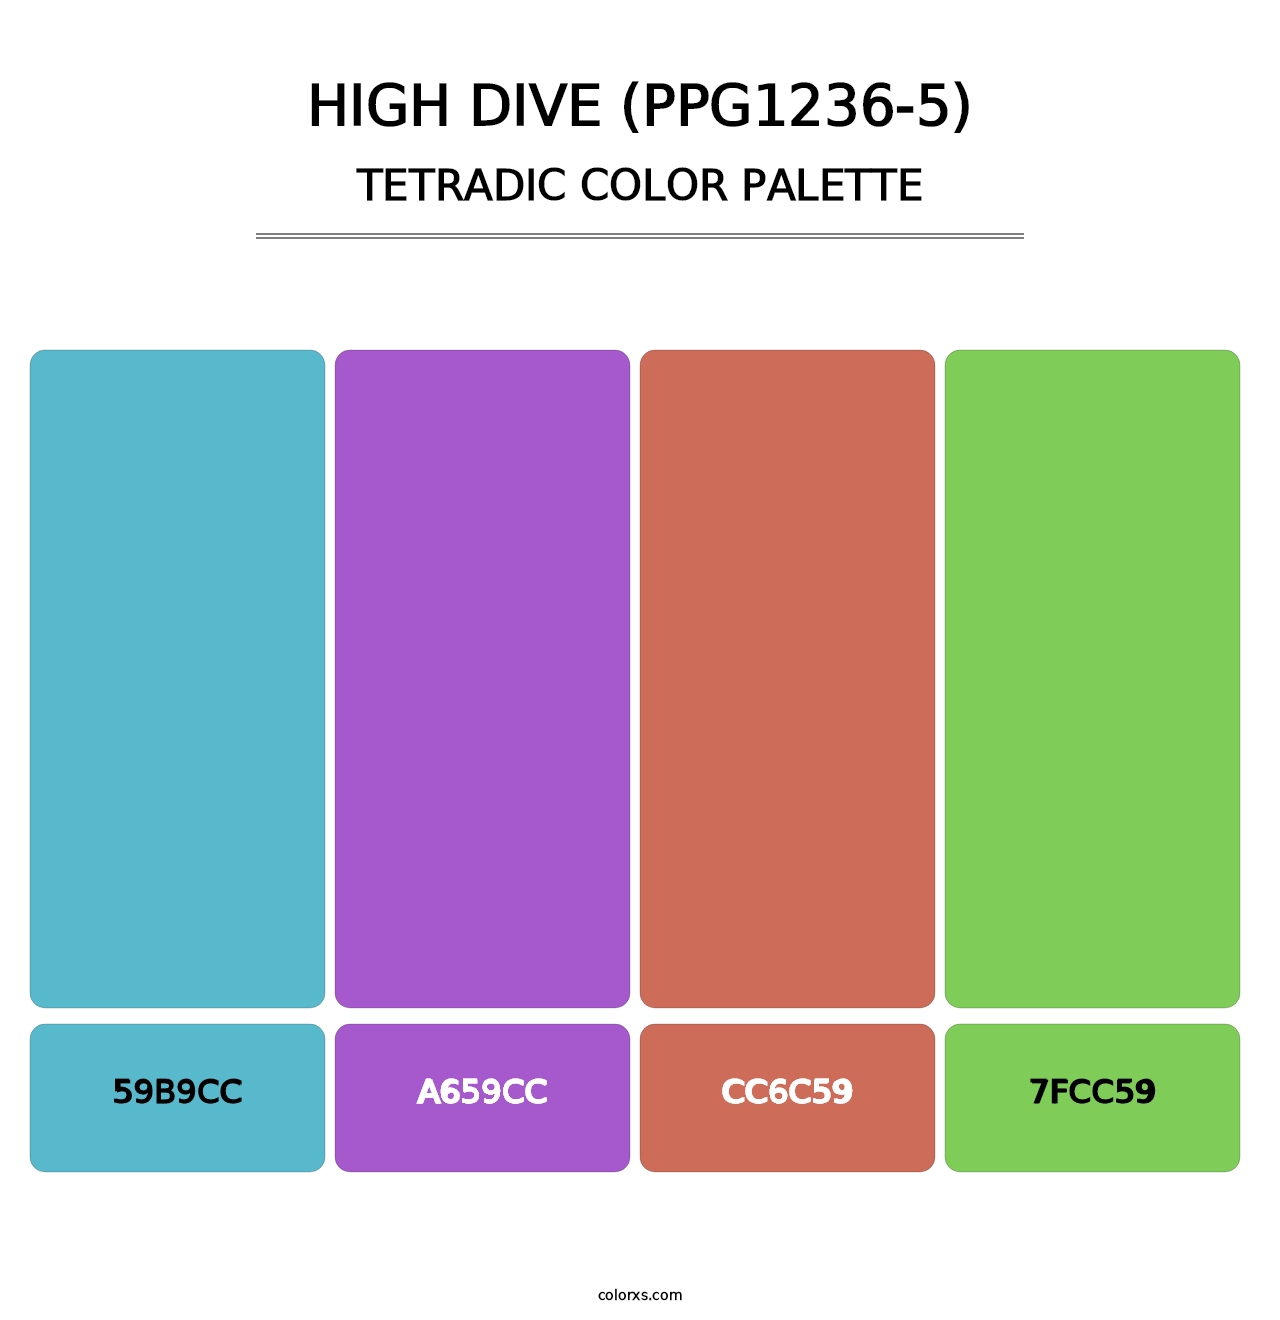 High Dive (PPG1236-5) - Tetradic Color Palette